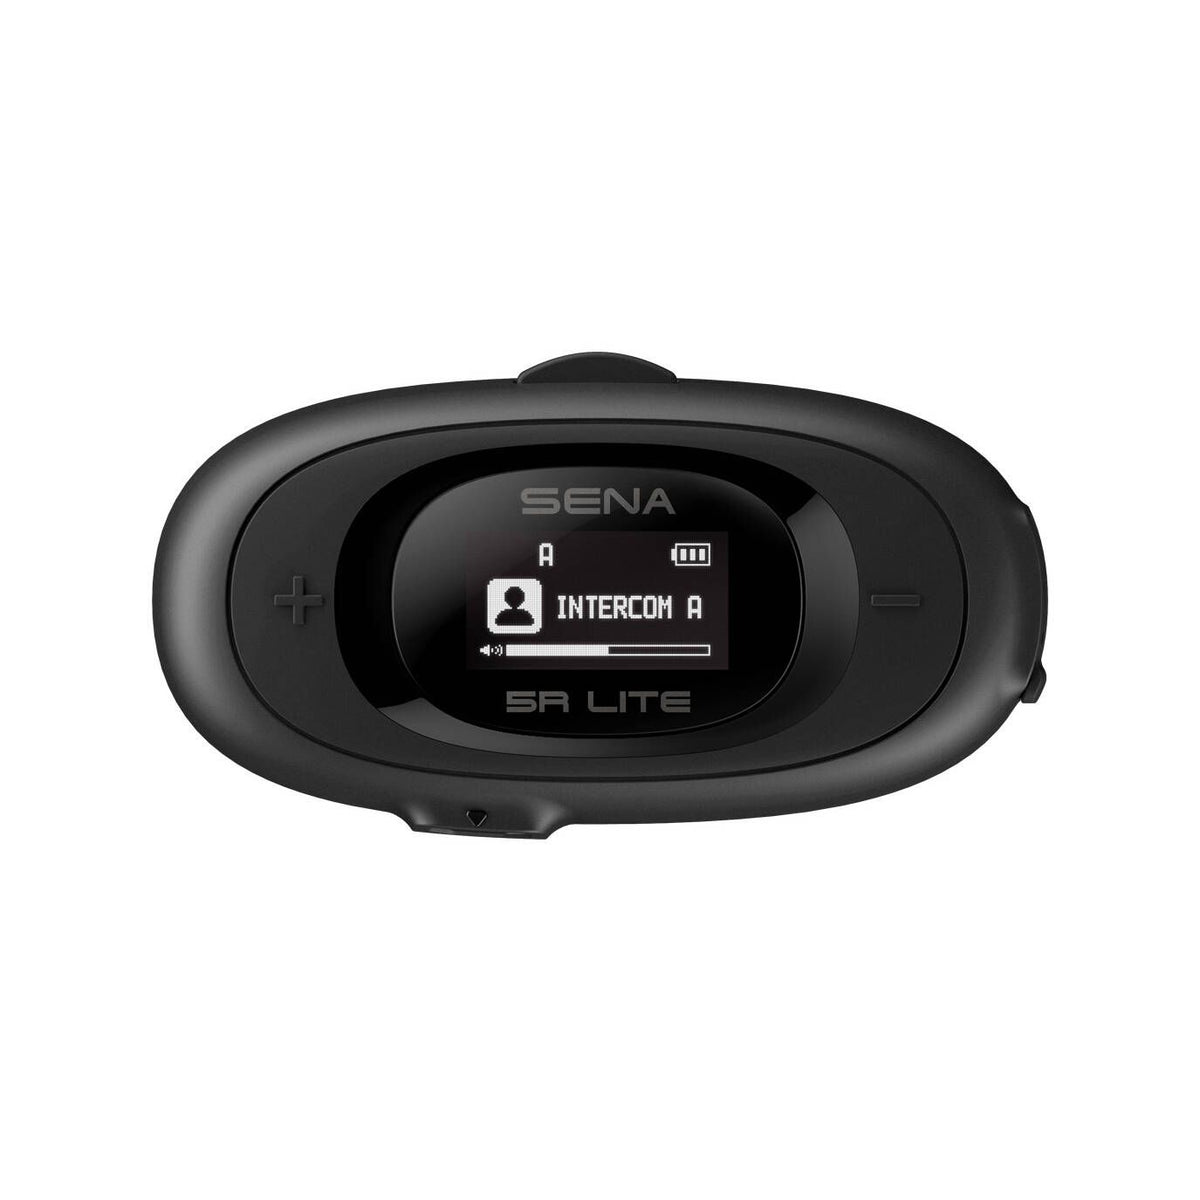 Interphone Bluetooth Sena 5R Lite